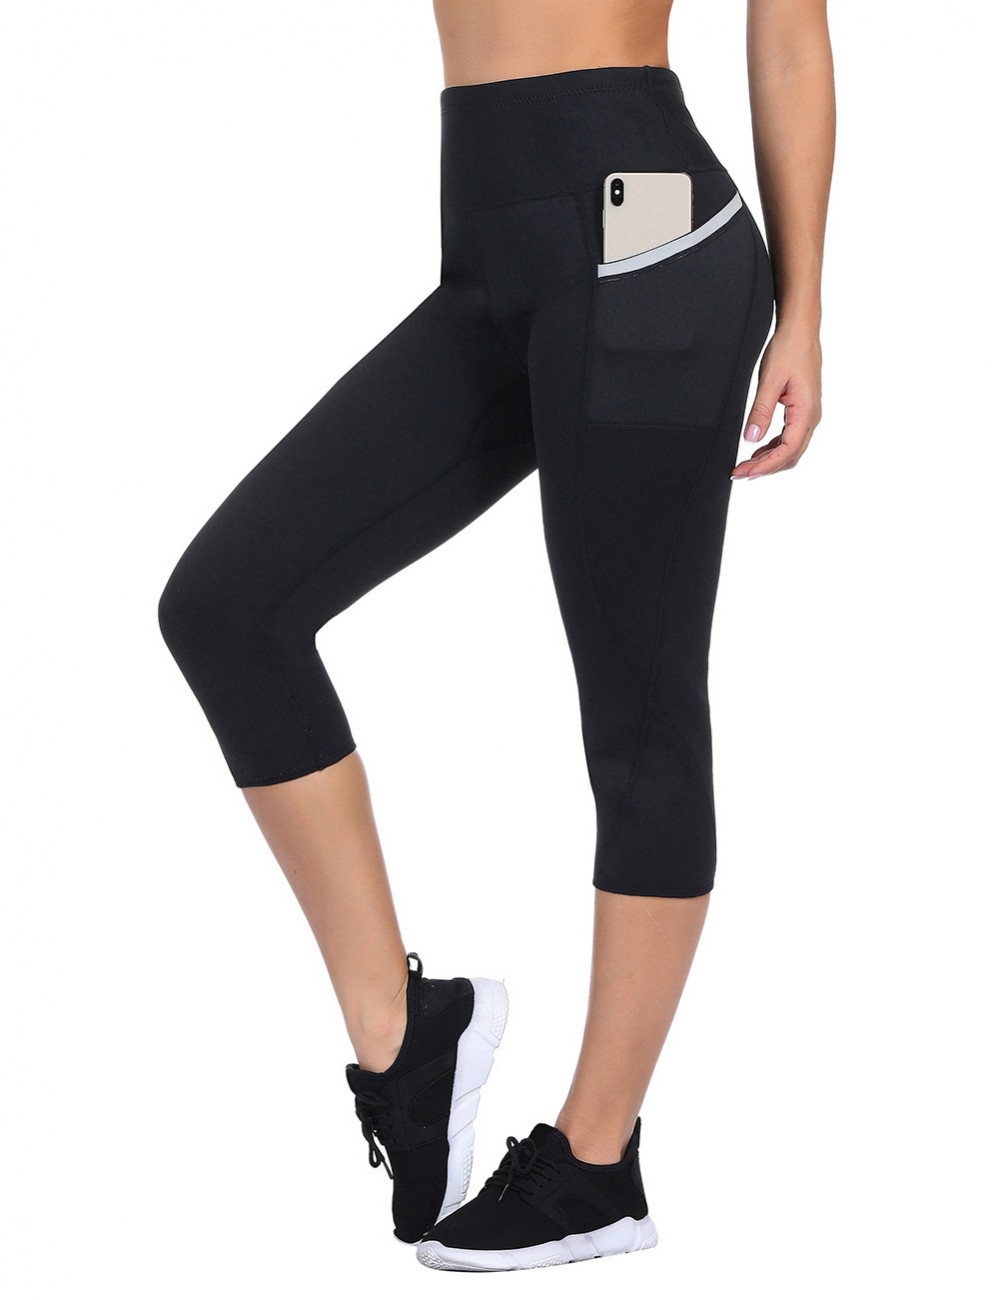 Black Big Size Reflective Neoprene Shapewear Capri Leggings High Waist For Running